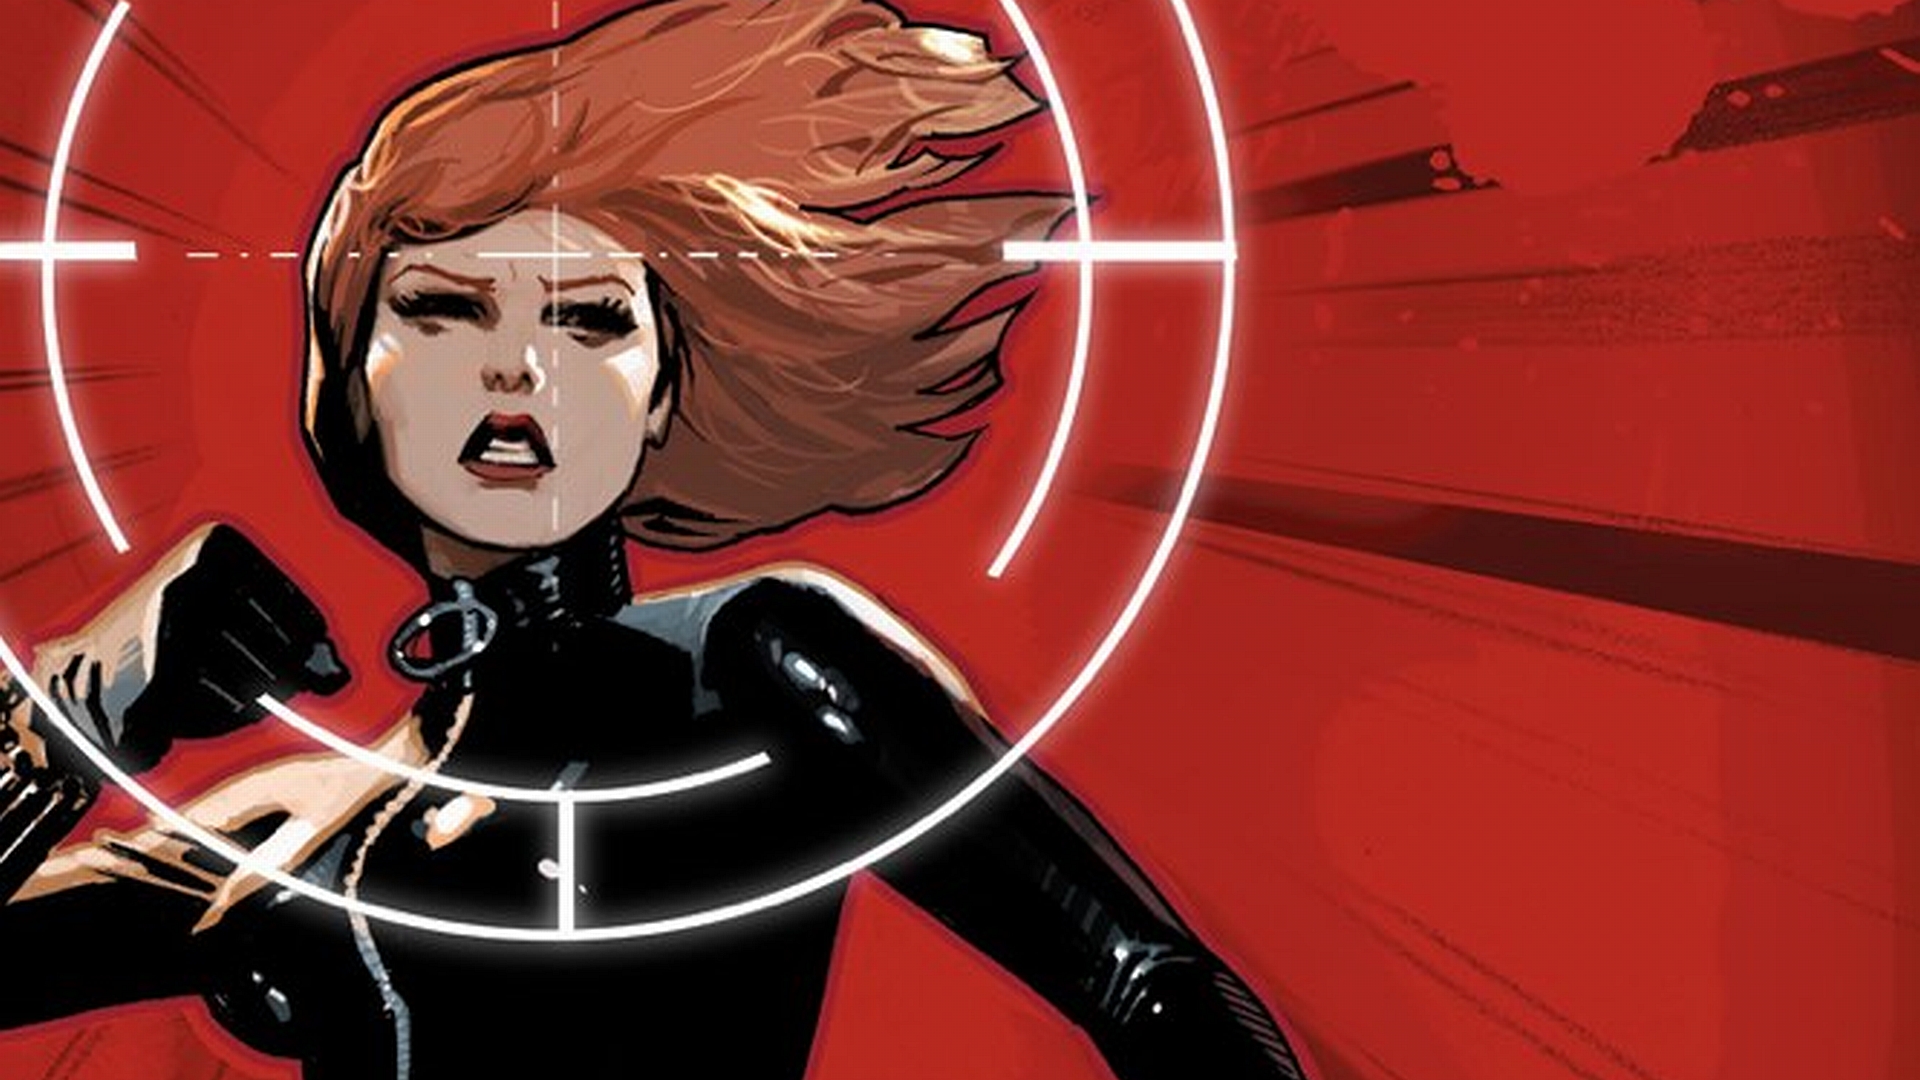 Black Widow desktop wallpaper featuring the iconic comics character.